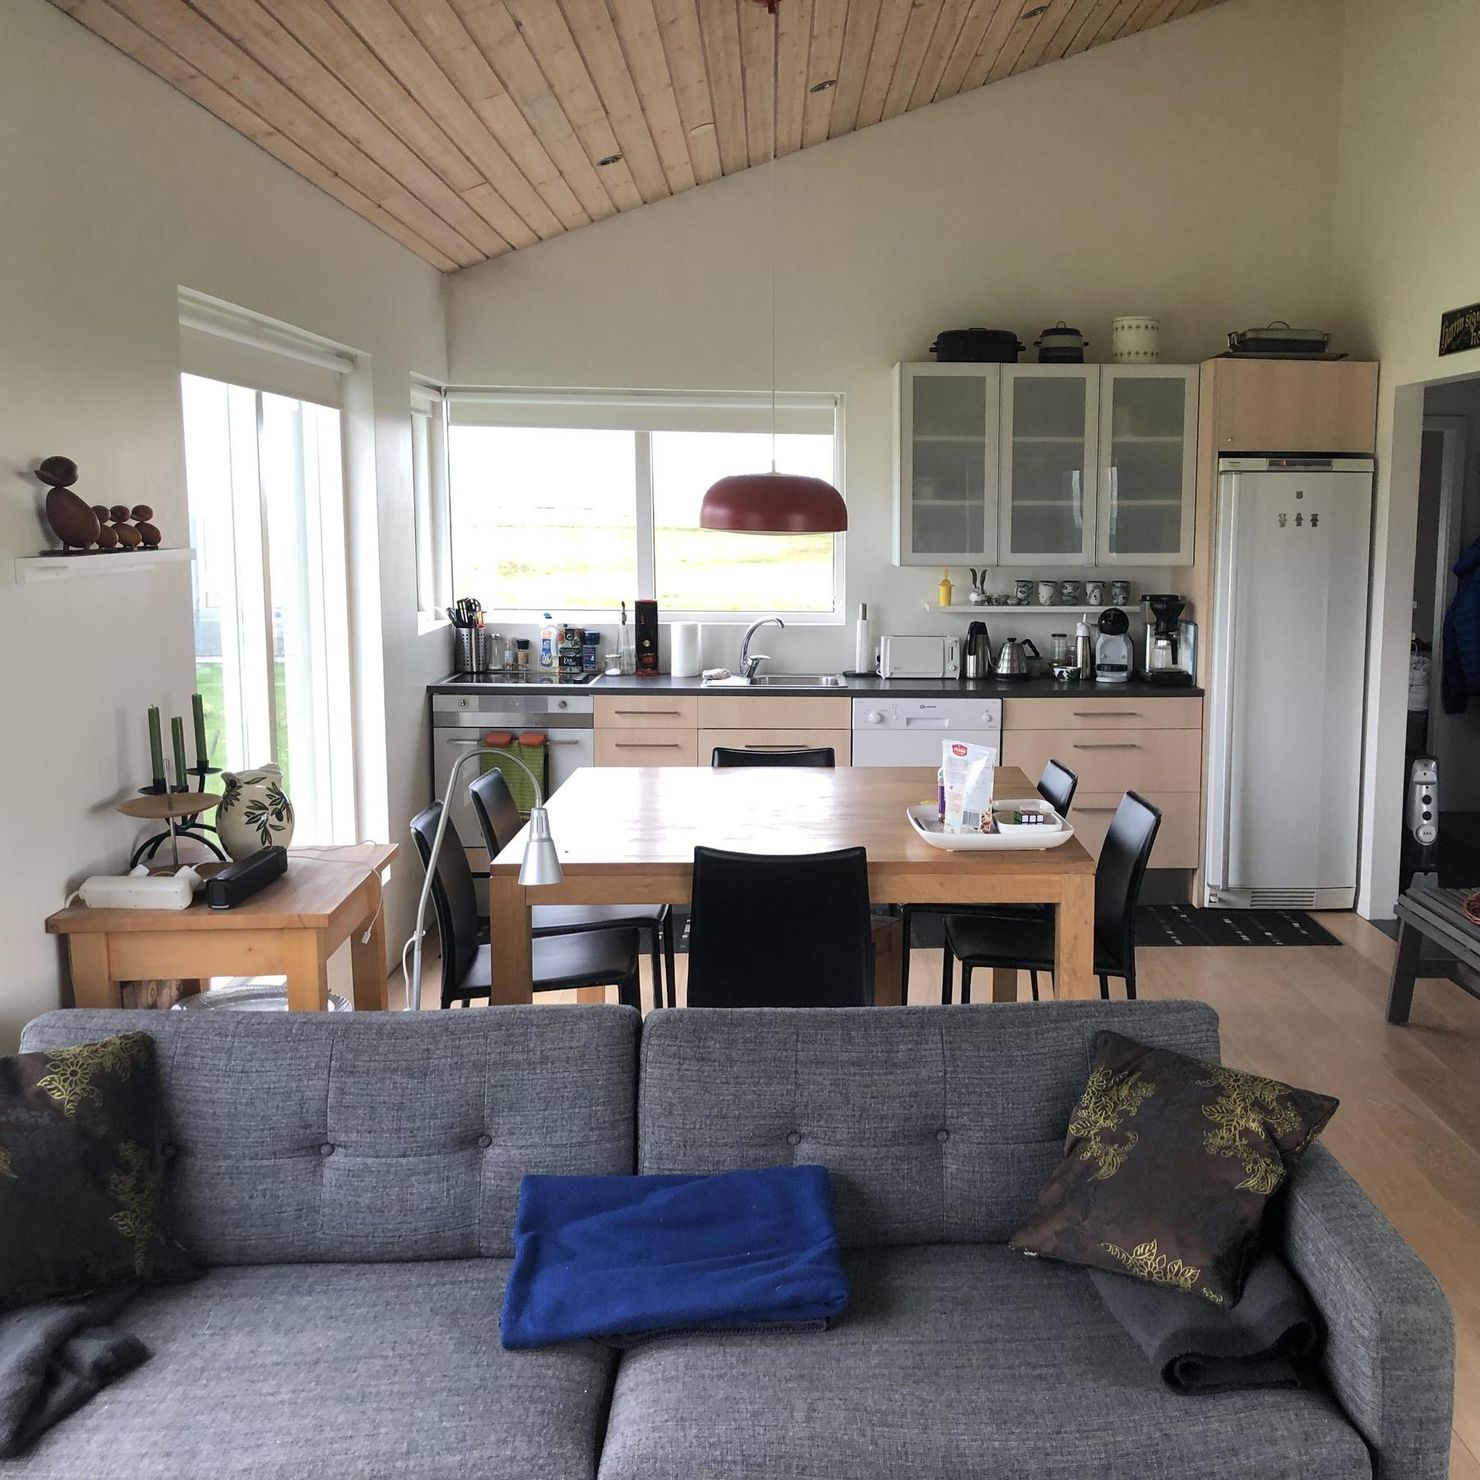 Open living room kitchen area